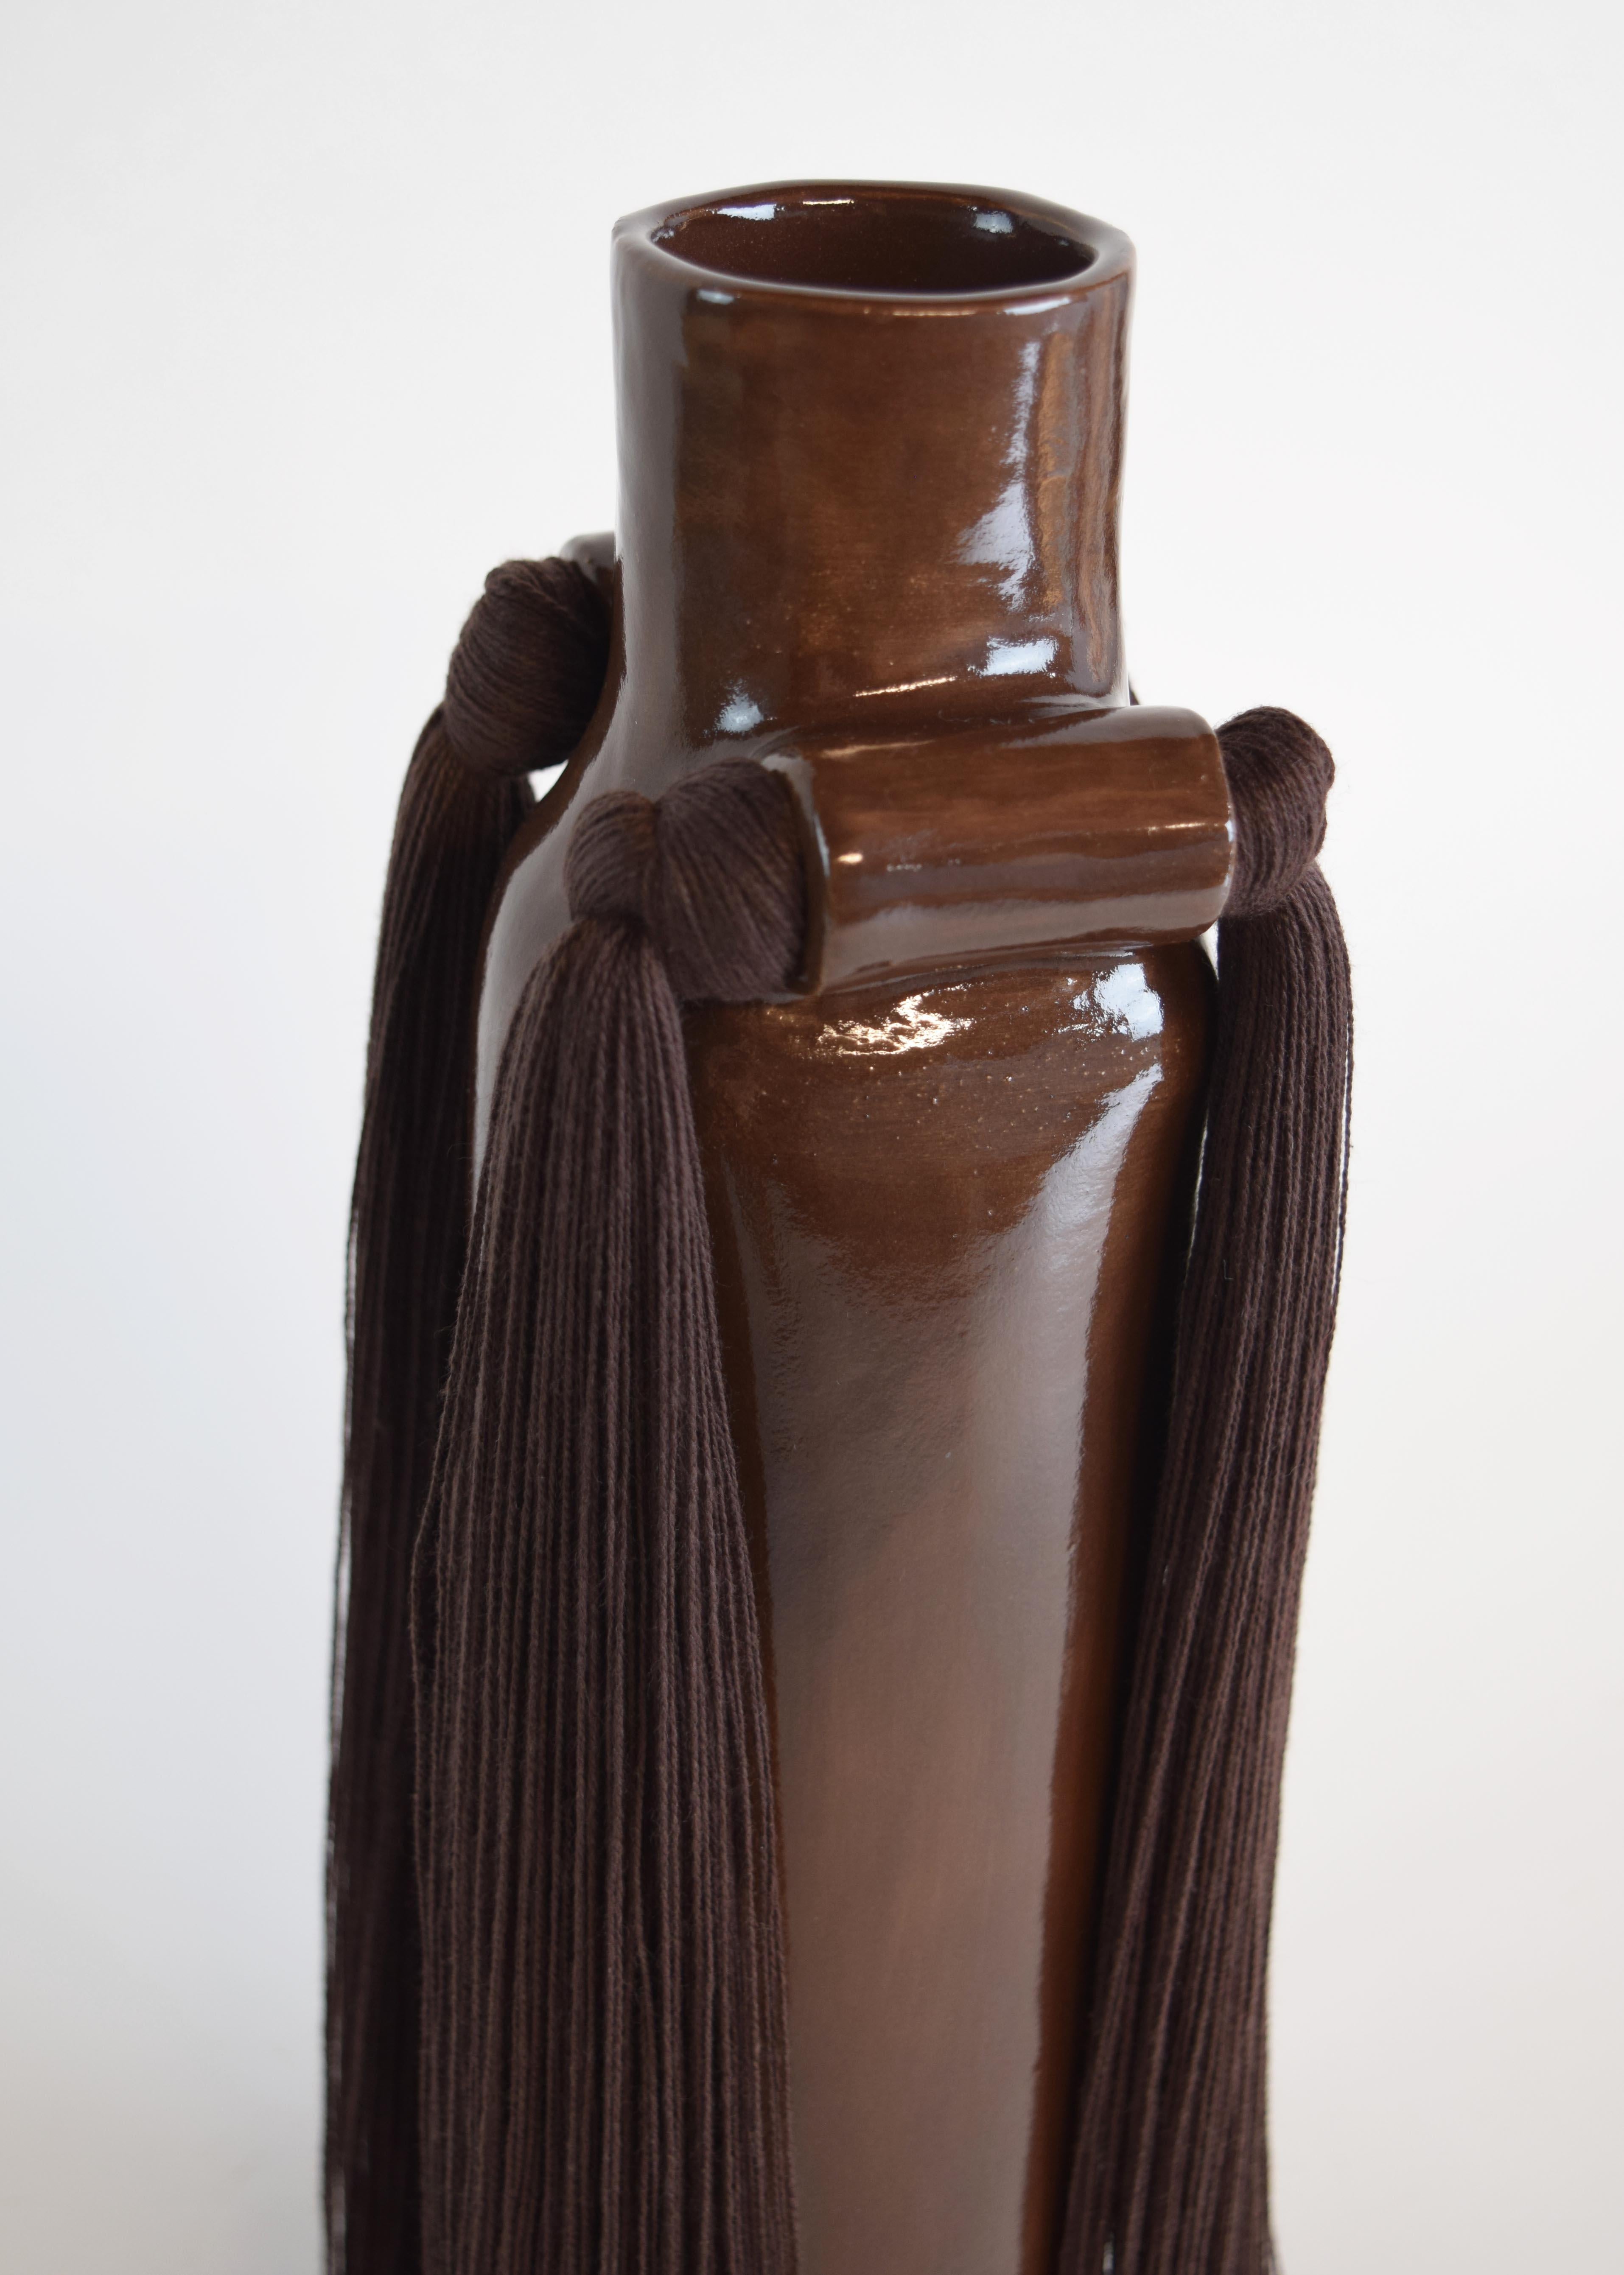 Organic Modern Handmade Ceramic Vase #703 in Brown Glaze with Dark Brown Cotton Fringe Detail For Sale